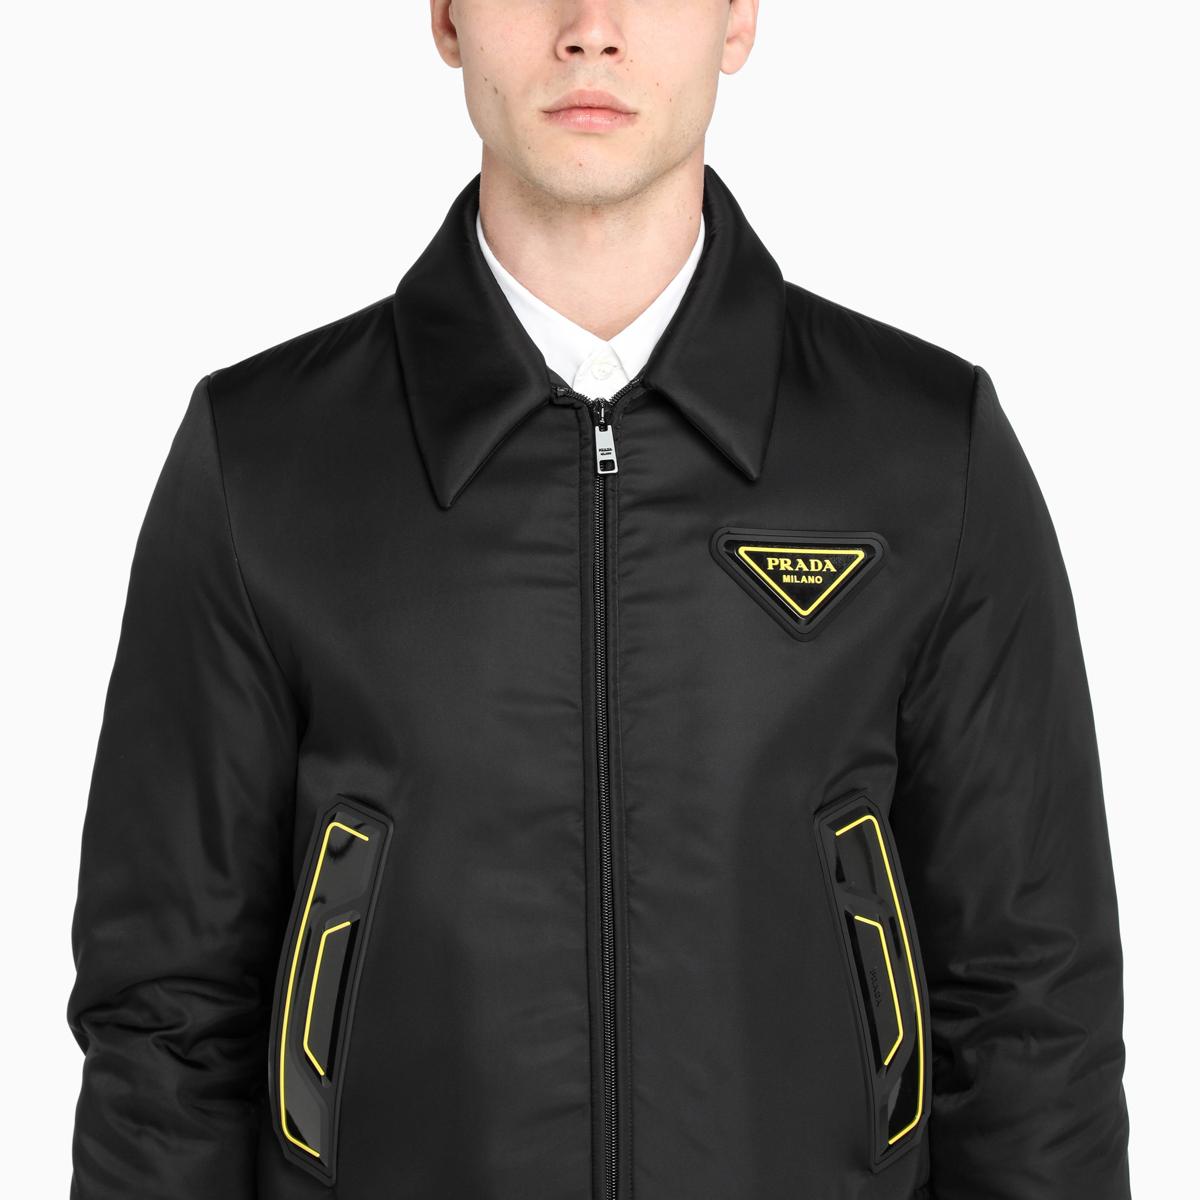 Top 32+ imagen prada jacket mens black - Thcshoanghoatham-badinh.edu.vn